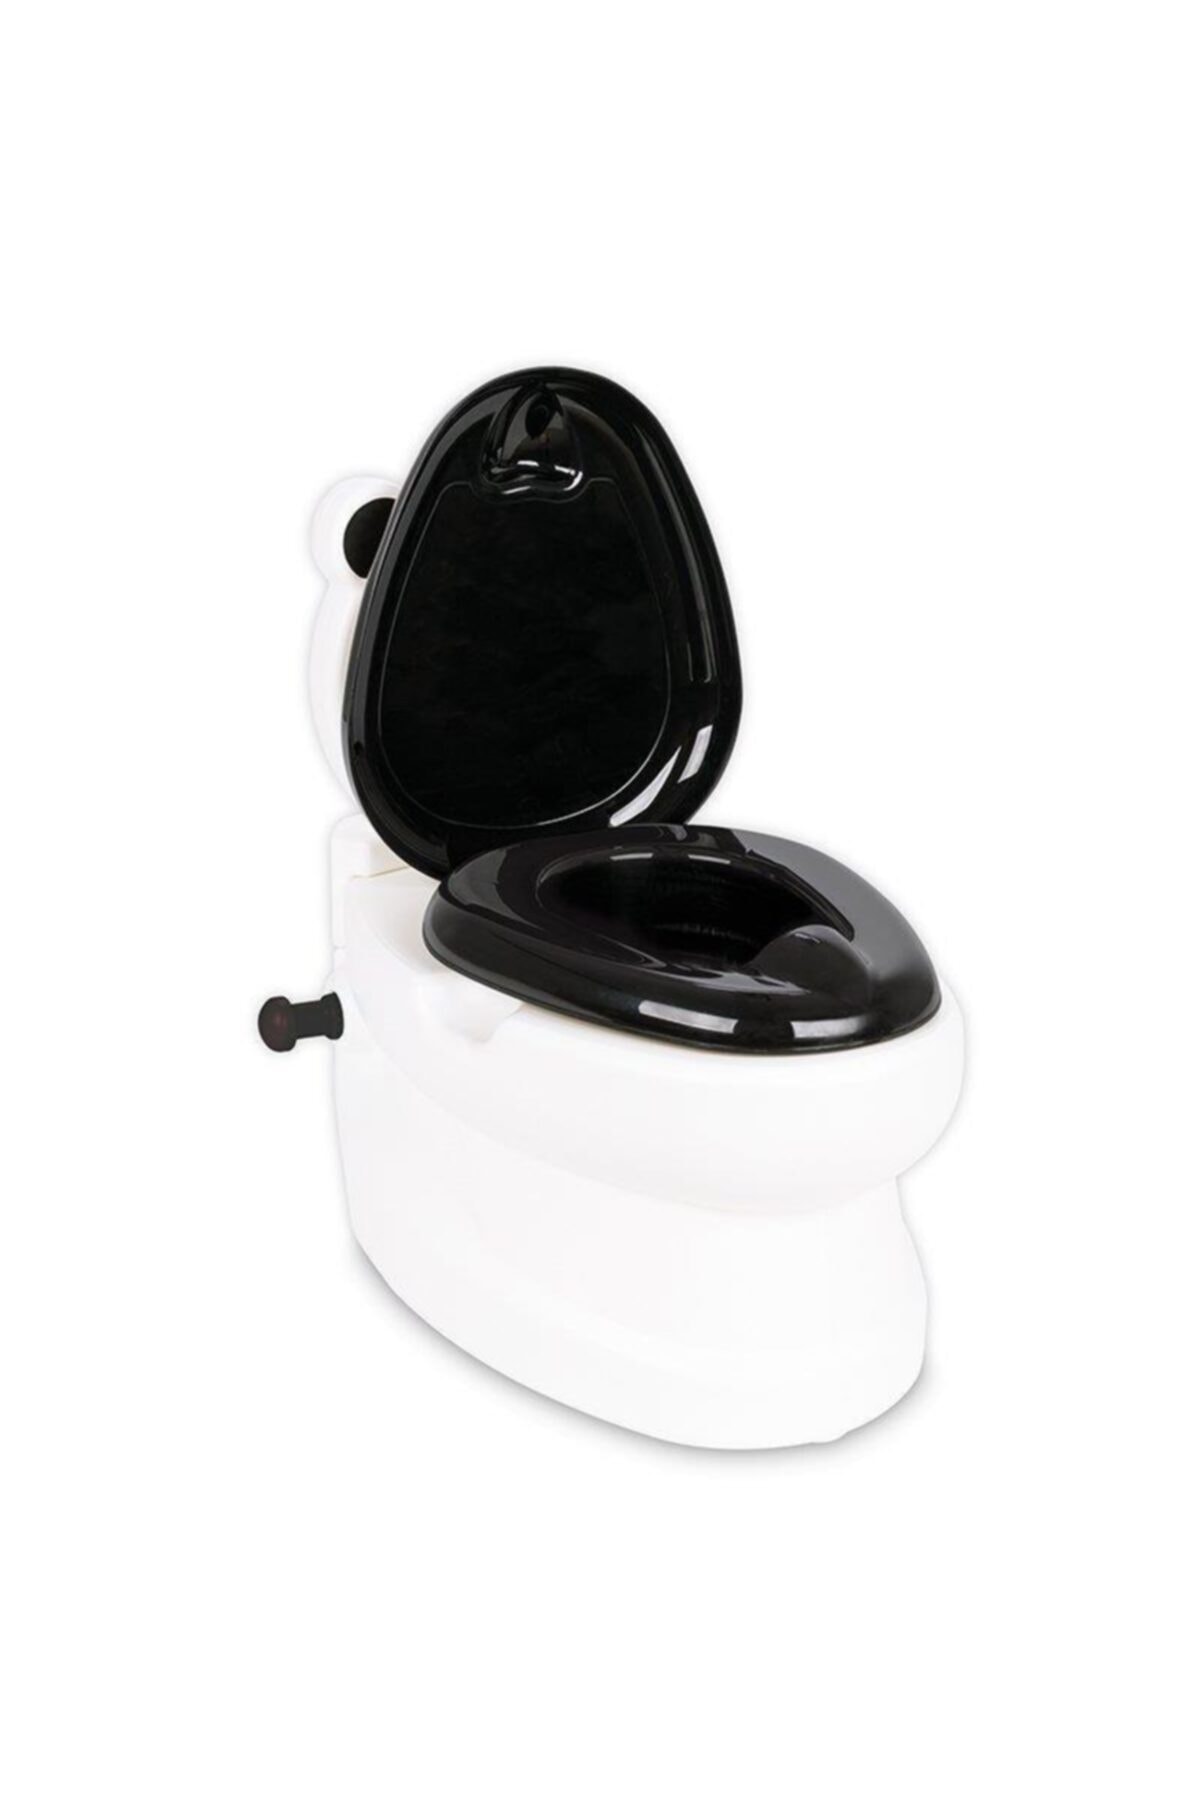 Baby Toilet Education , Kids Panda Motif. Black and White , Kid Educative , Toilet bowl , Commeda Urinal Water Closet Seat